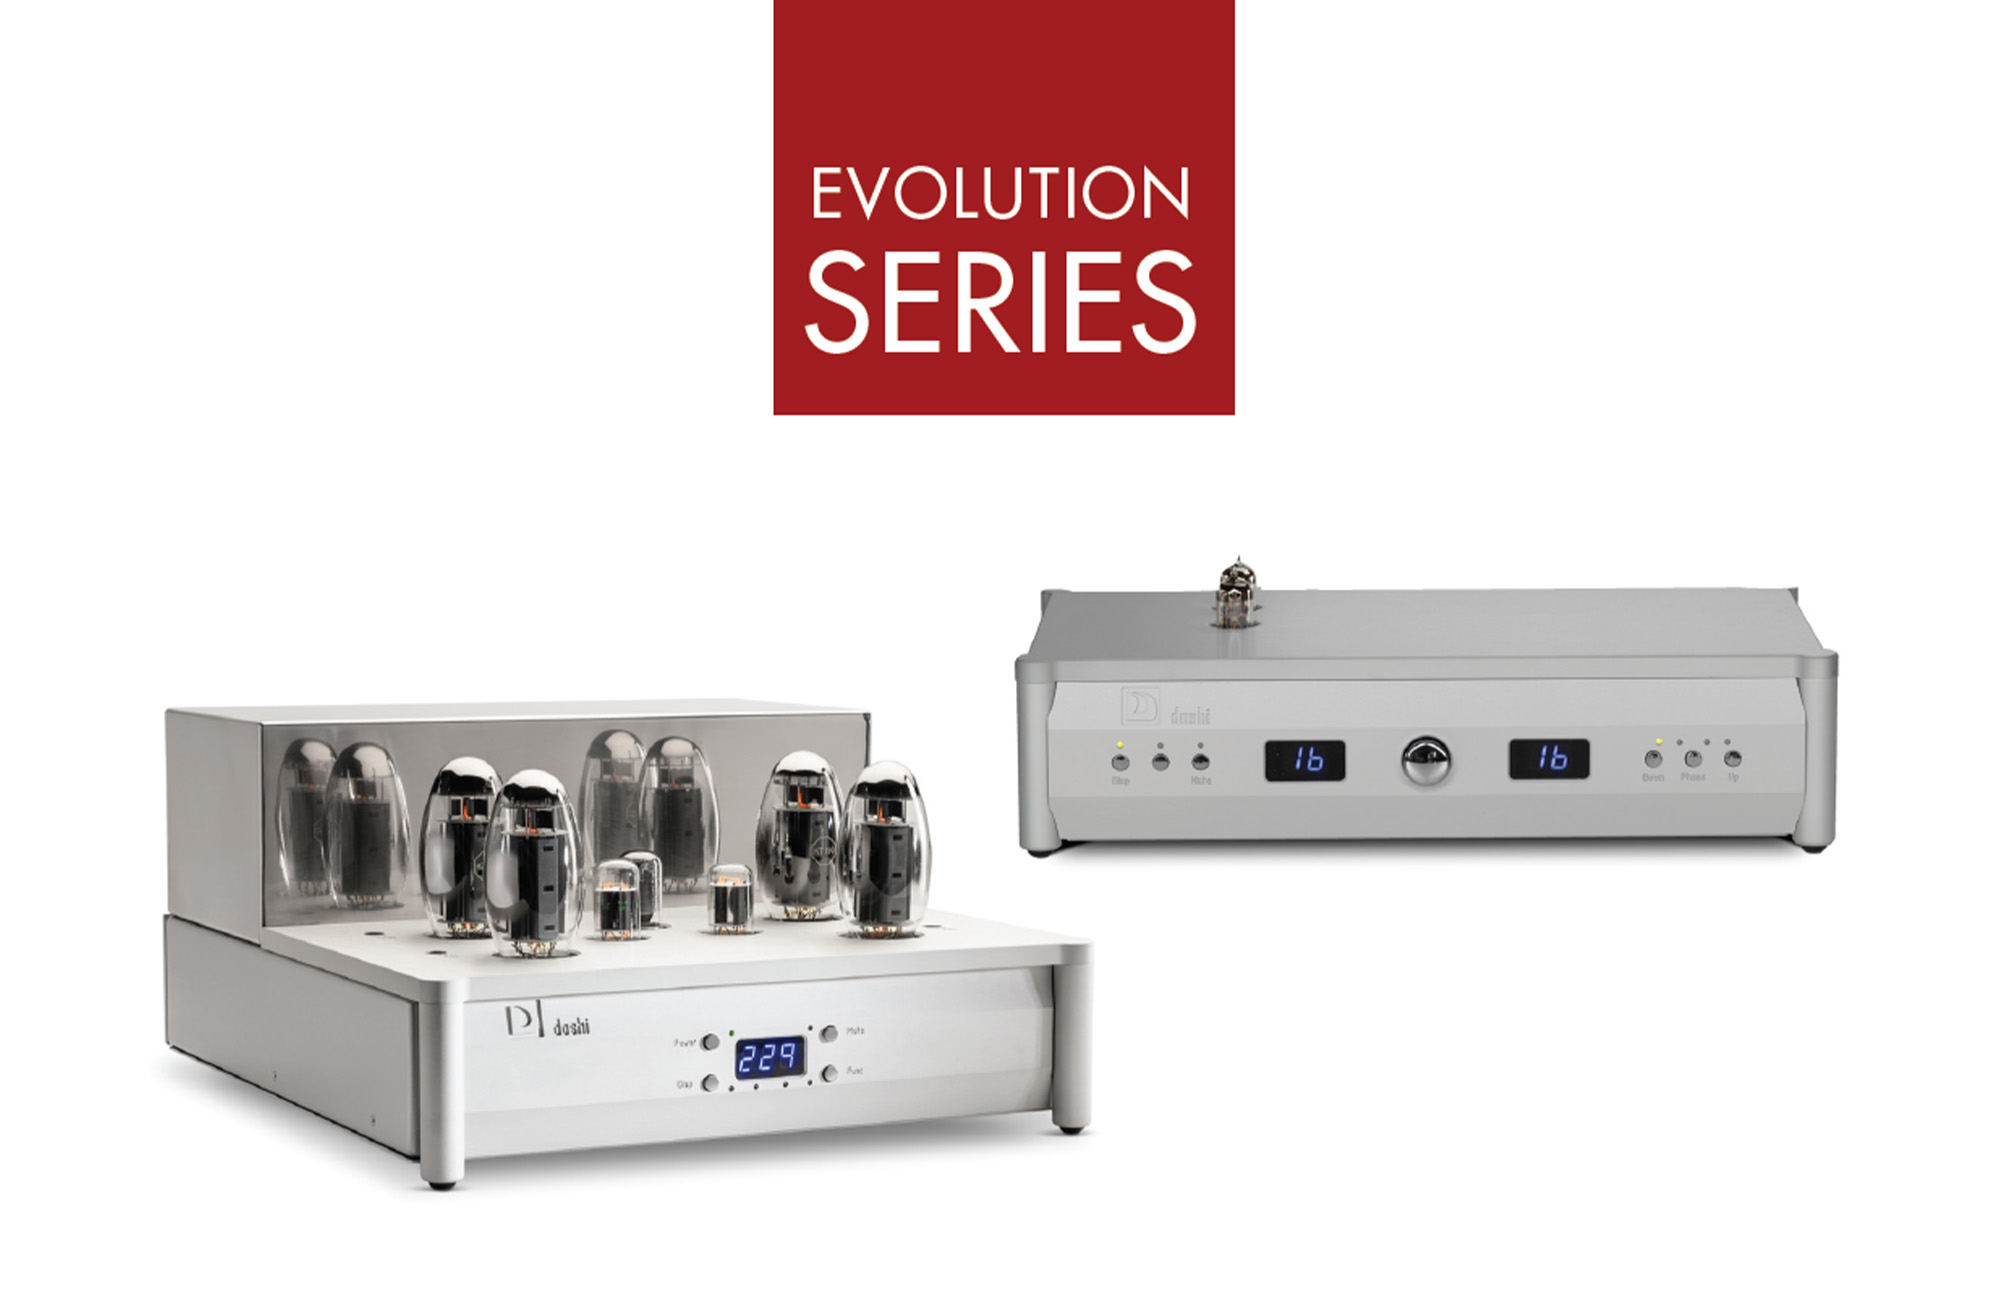 Evolution series amplifiers